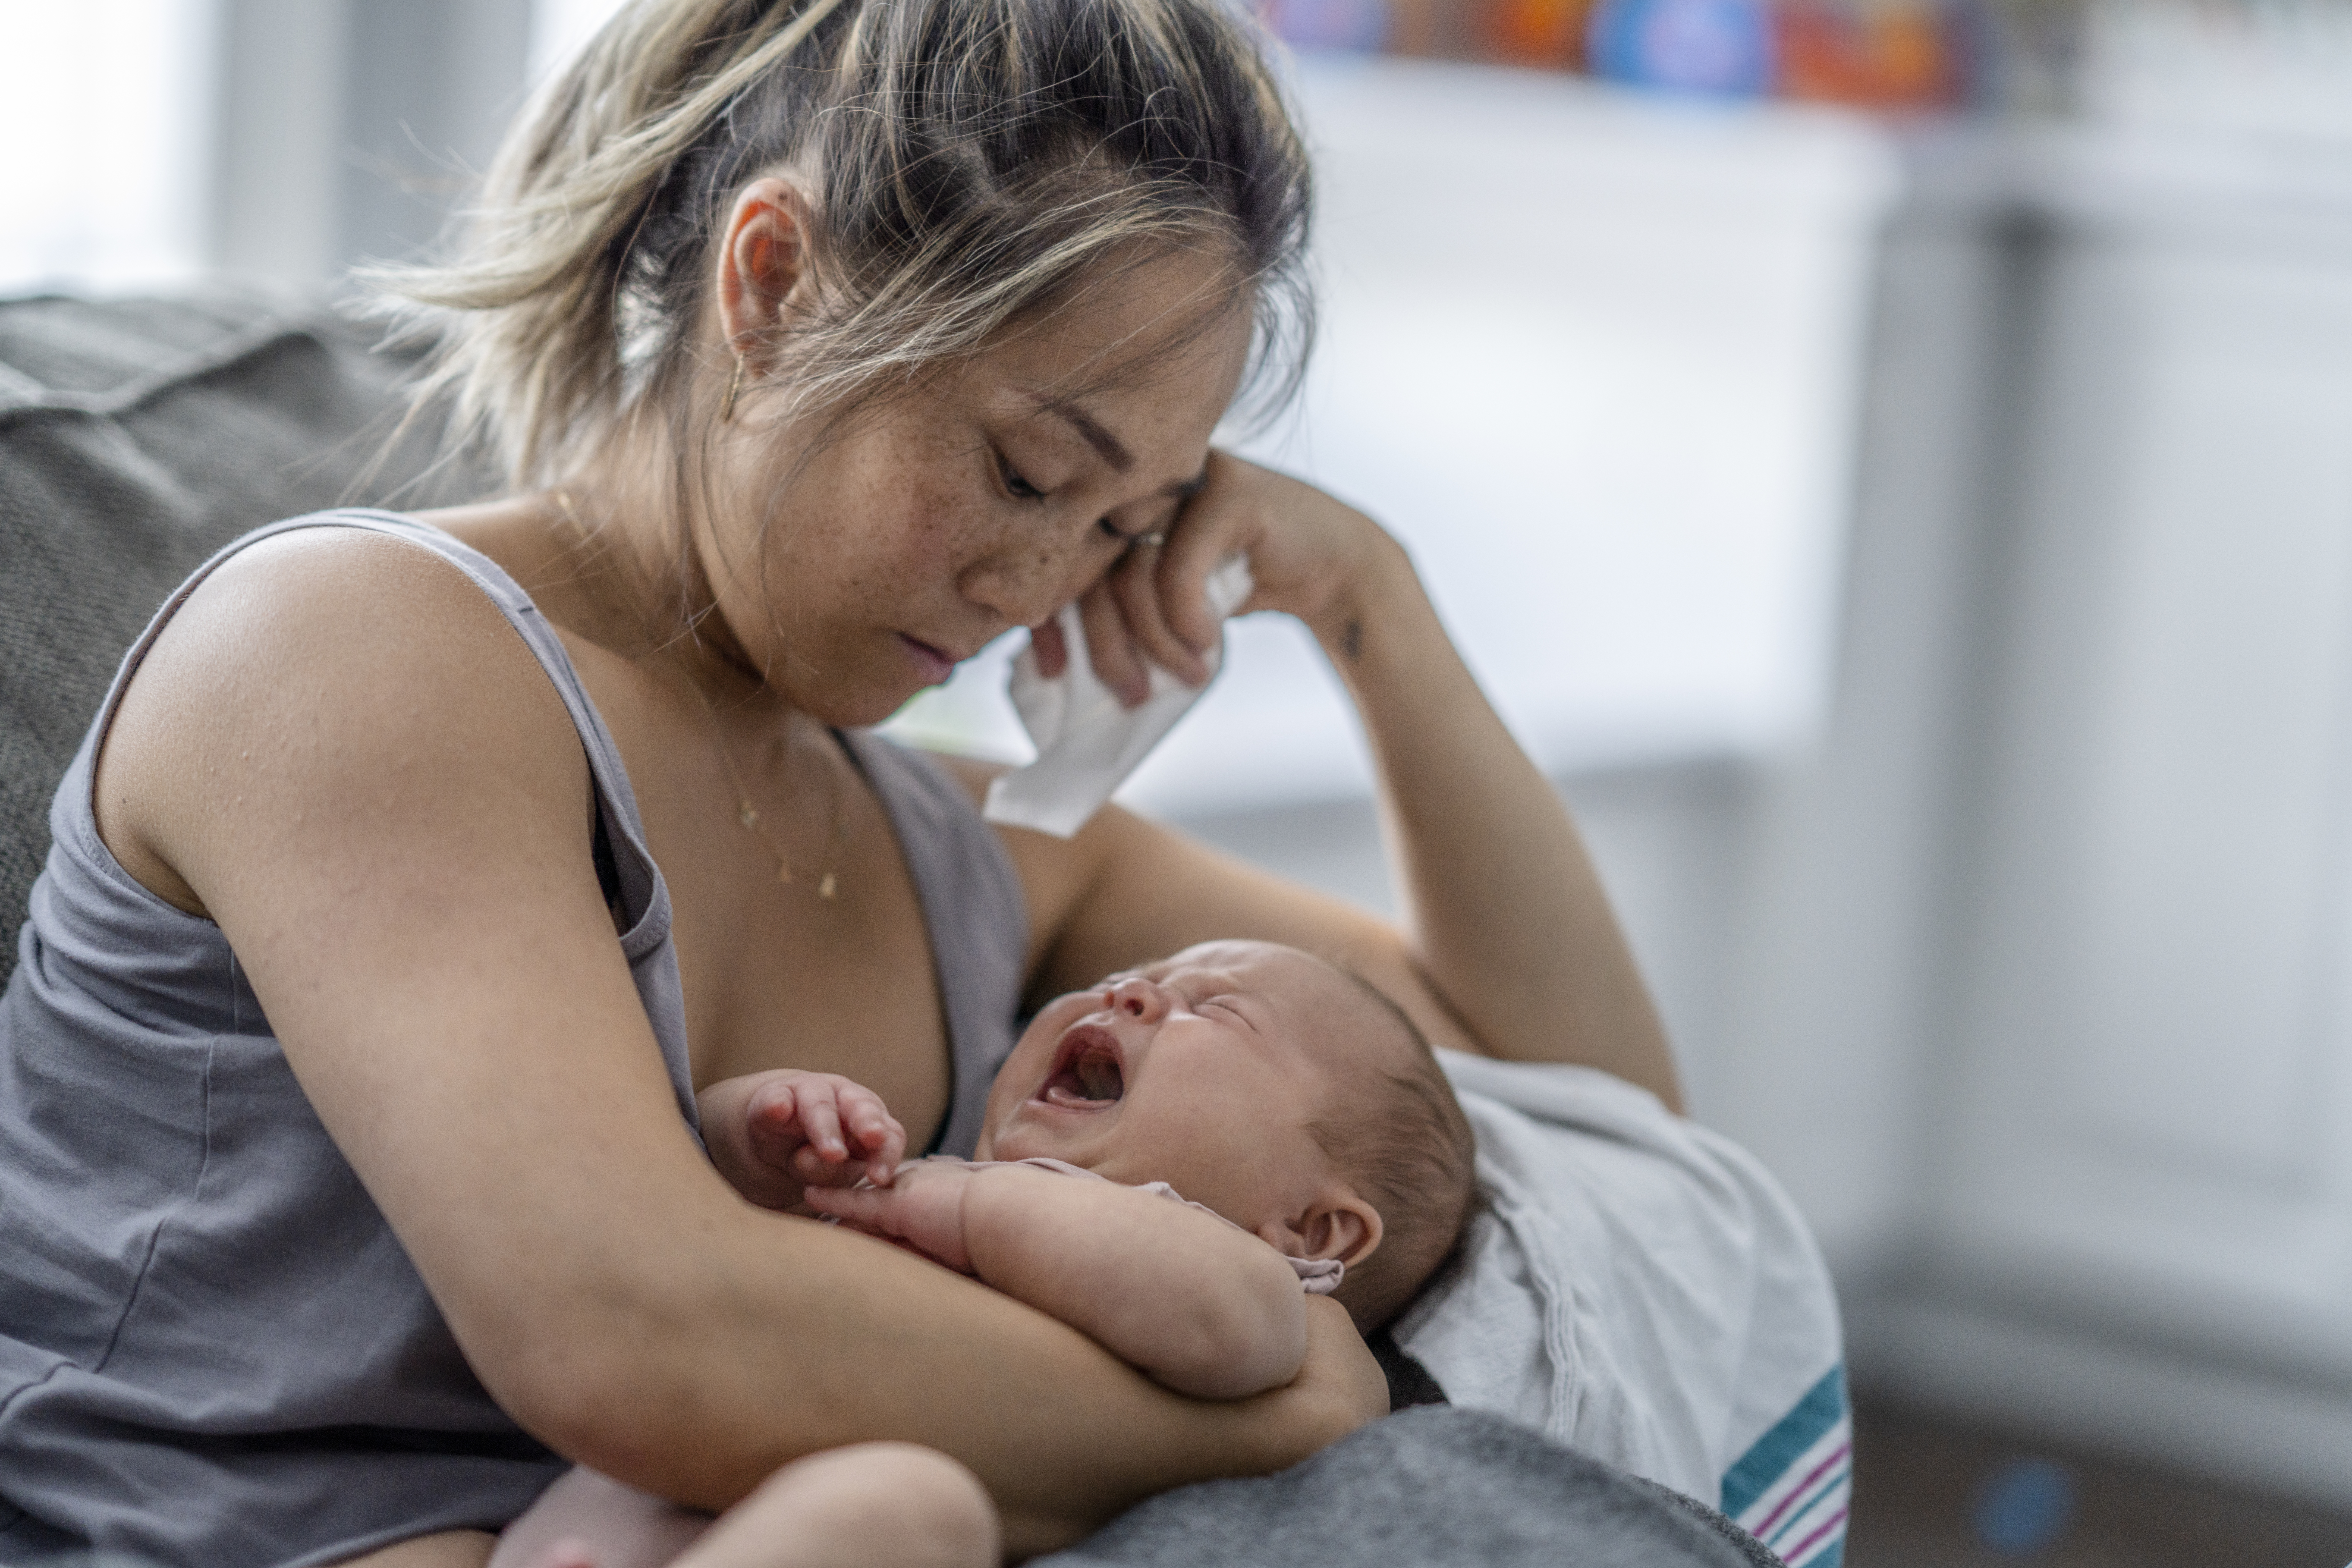 Canadian researchers create natural supplement to combat postpartum blues